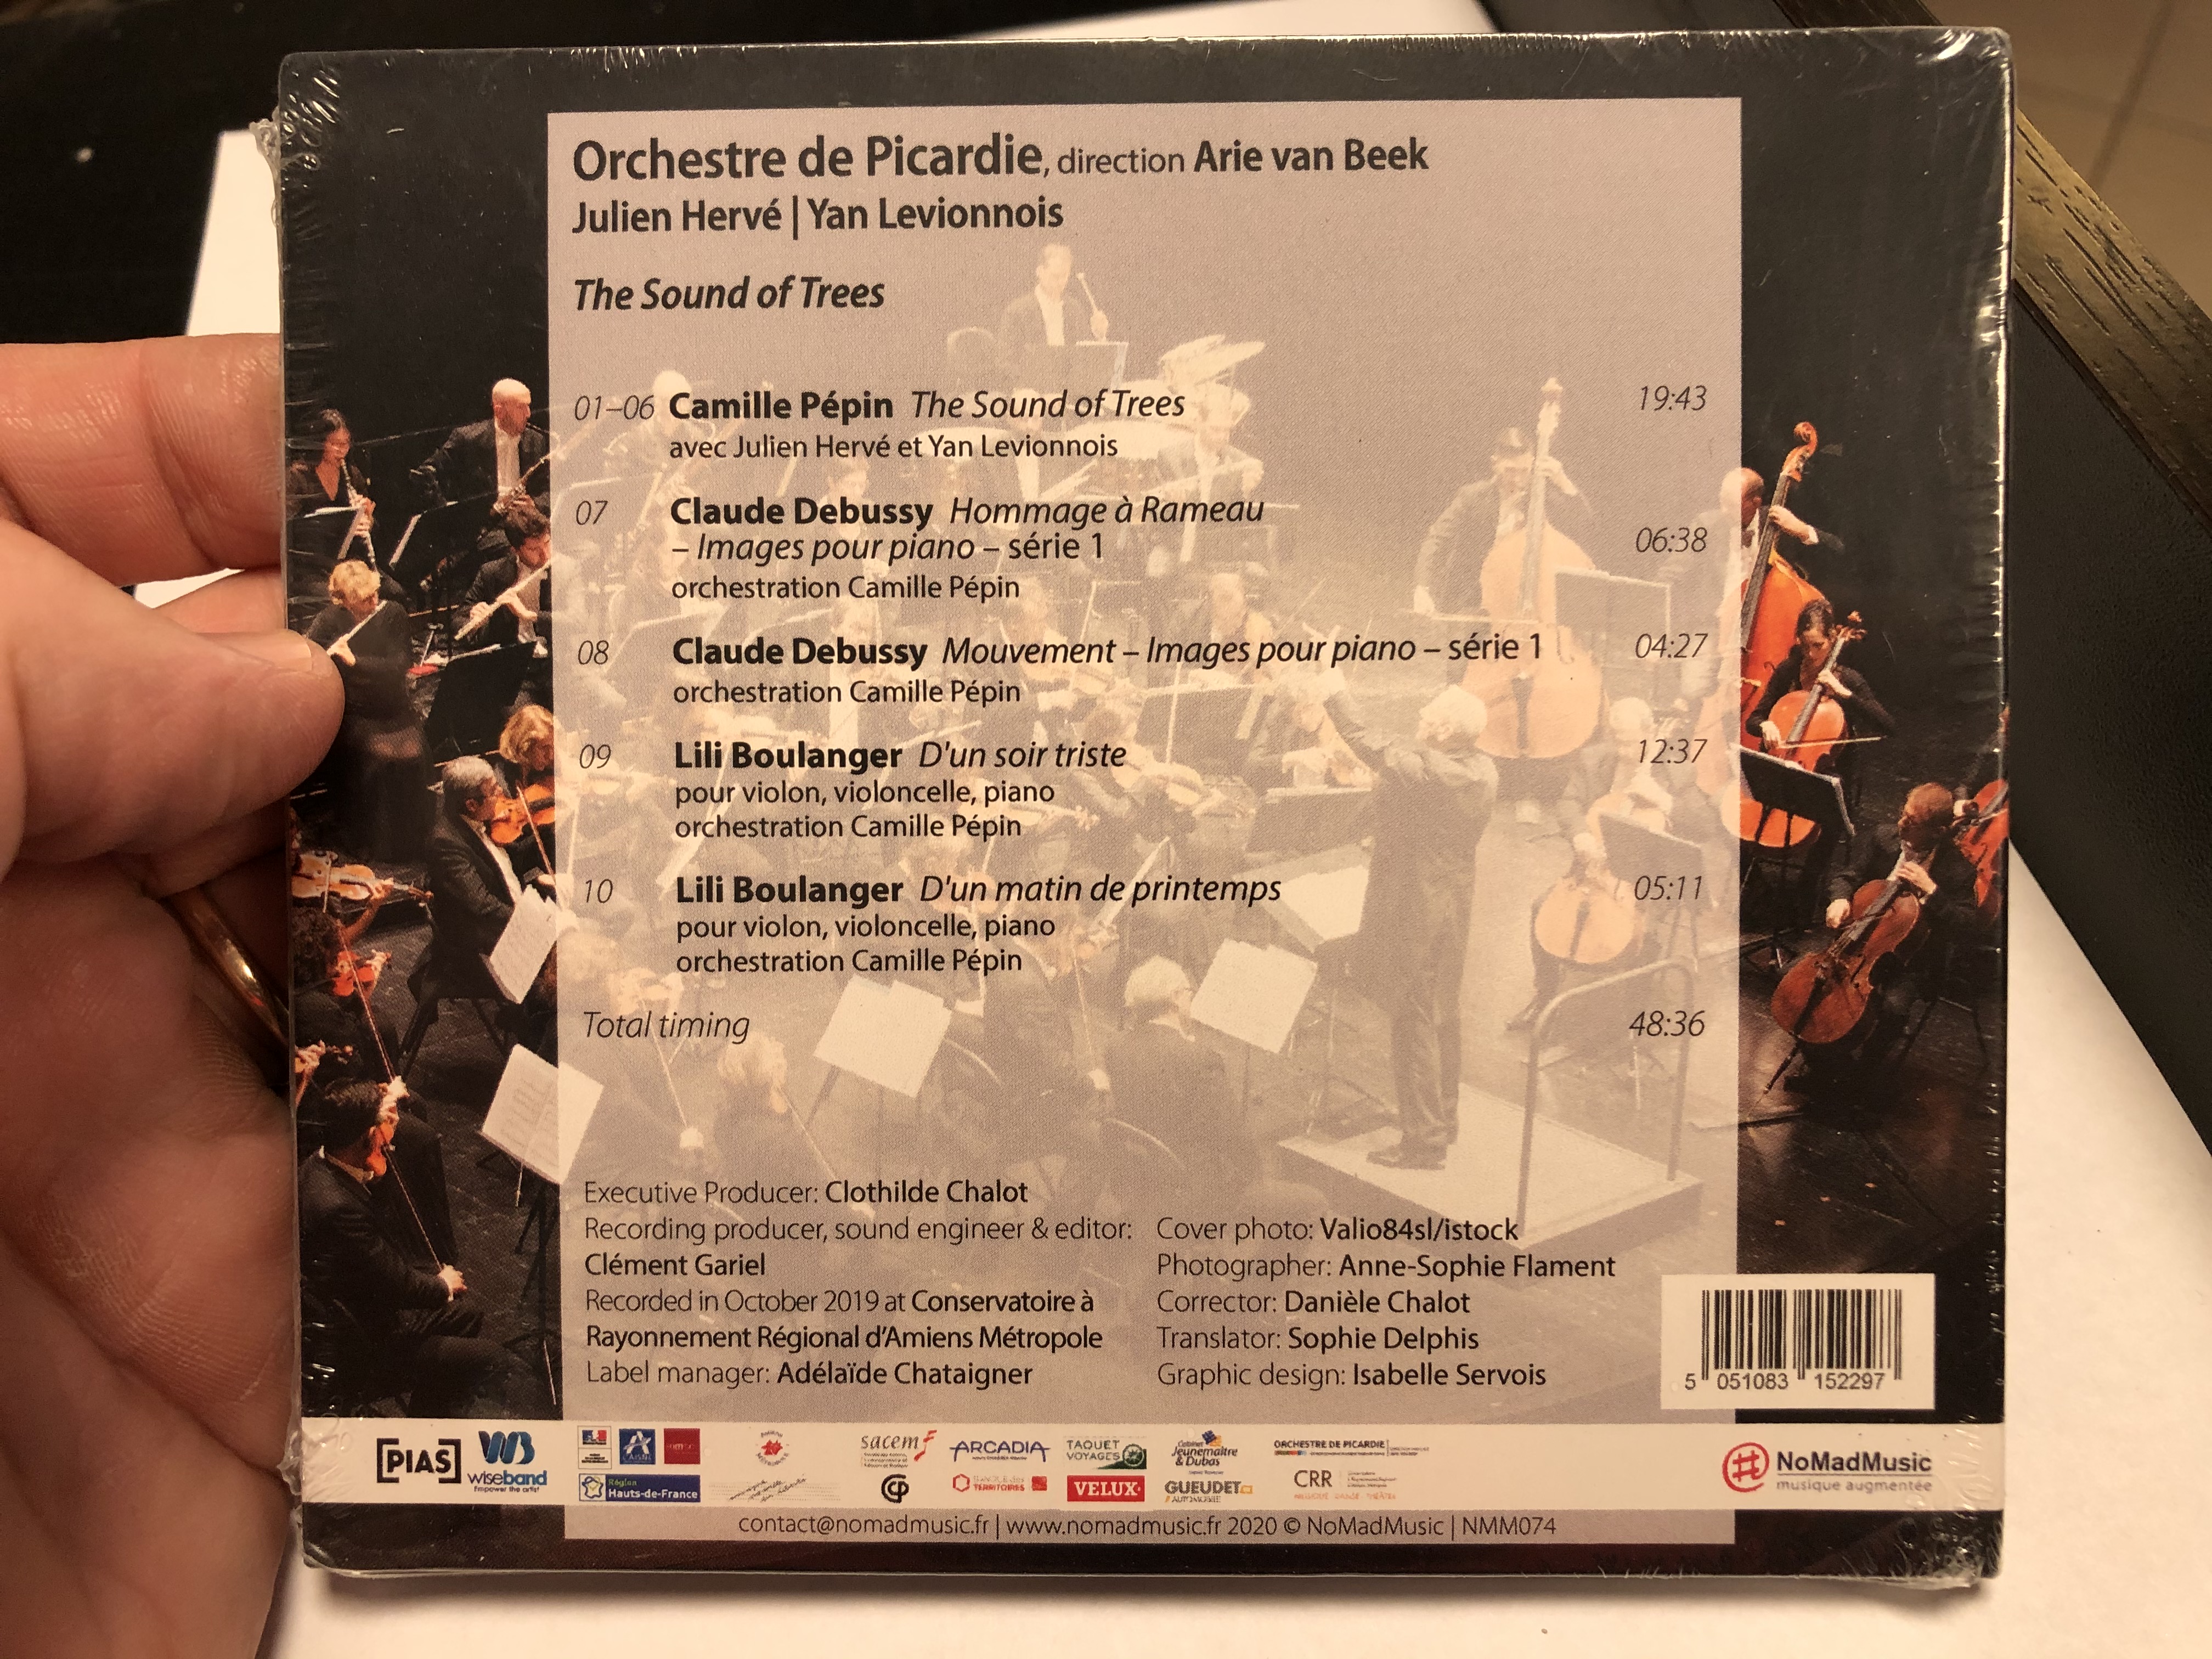 orchestre-de-picardie-arie-van-beek-direction-julien-herve-yan-levionnois-the-sound-of-trees-camille-p-pin-claude-debussy-lili-boulanger-nomadmusic-audio-cd-2020-nmm074-2-.jpg